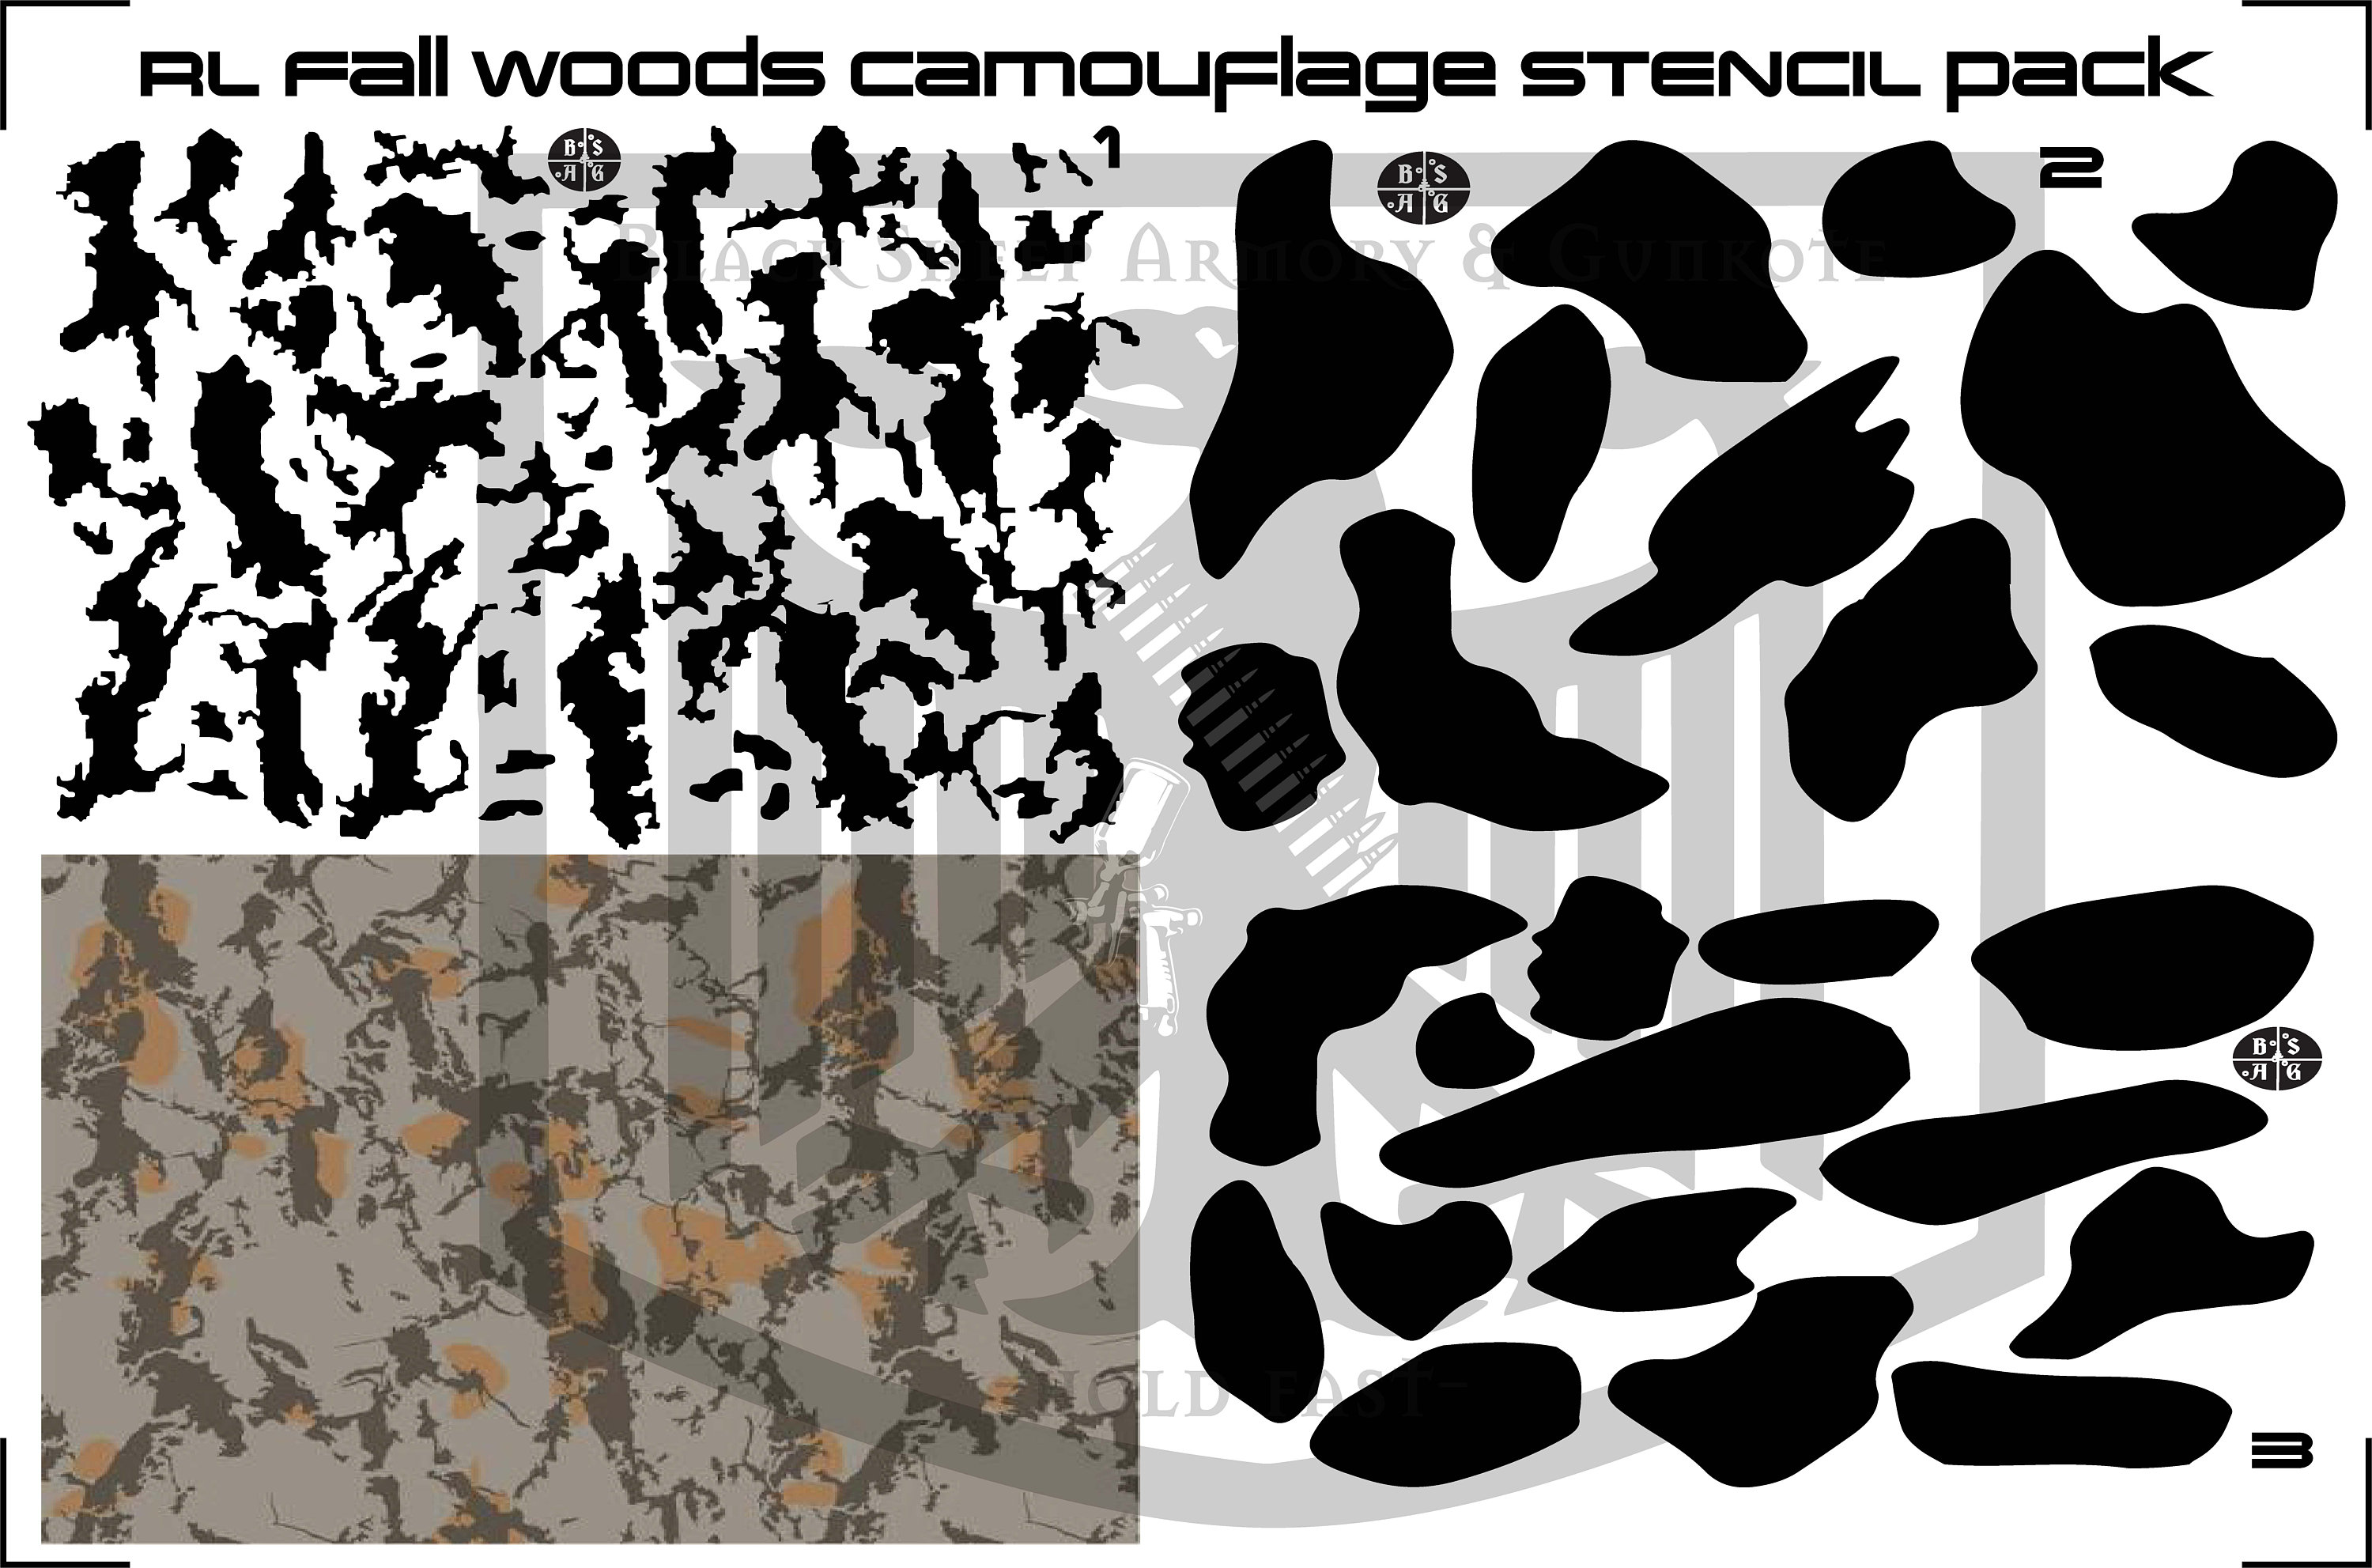 TORN CAMO STREAKS Adhesive Stencils (3 Pack) - Camo Stencils for